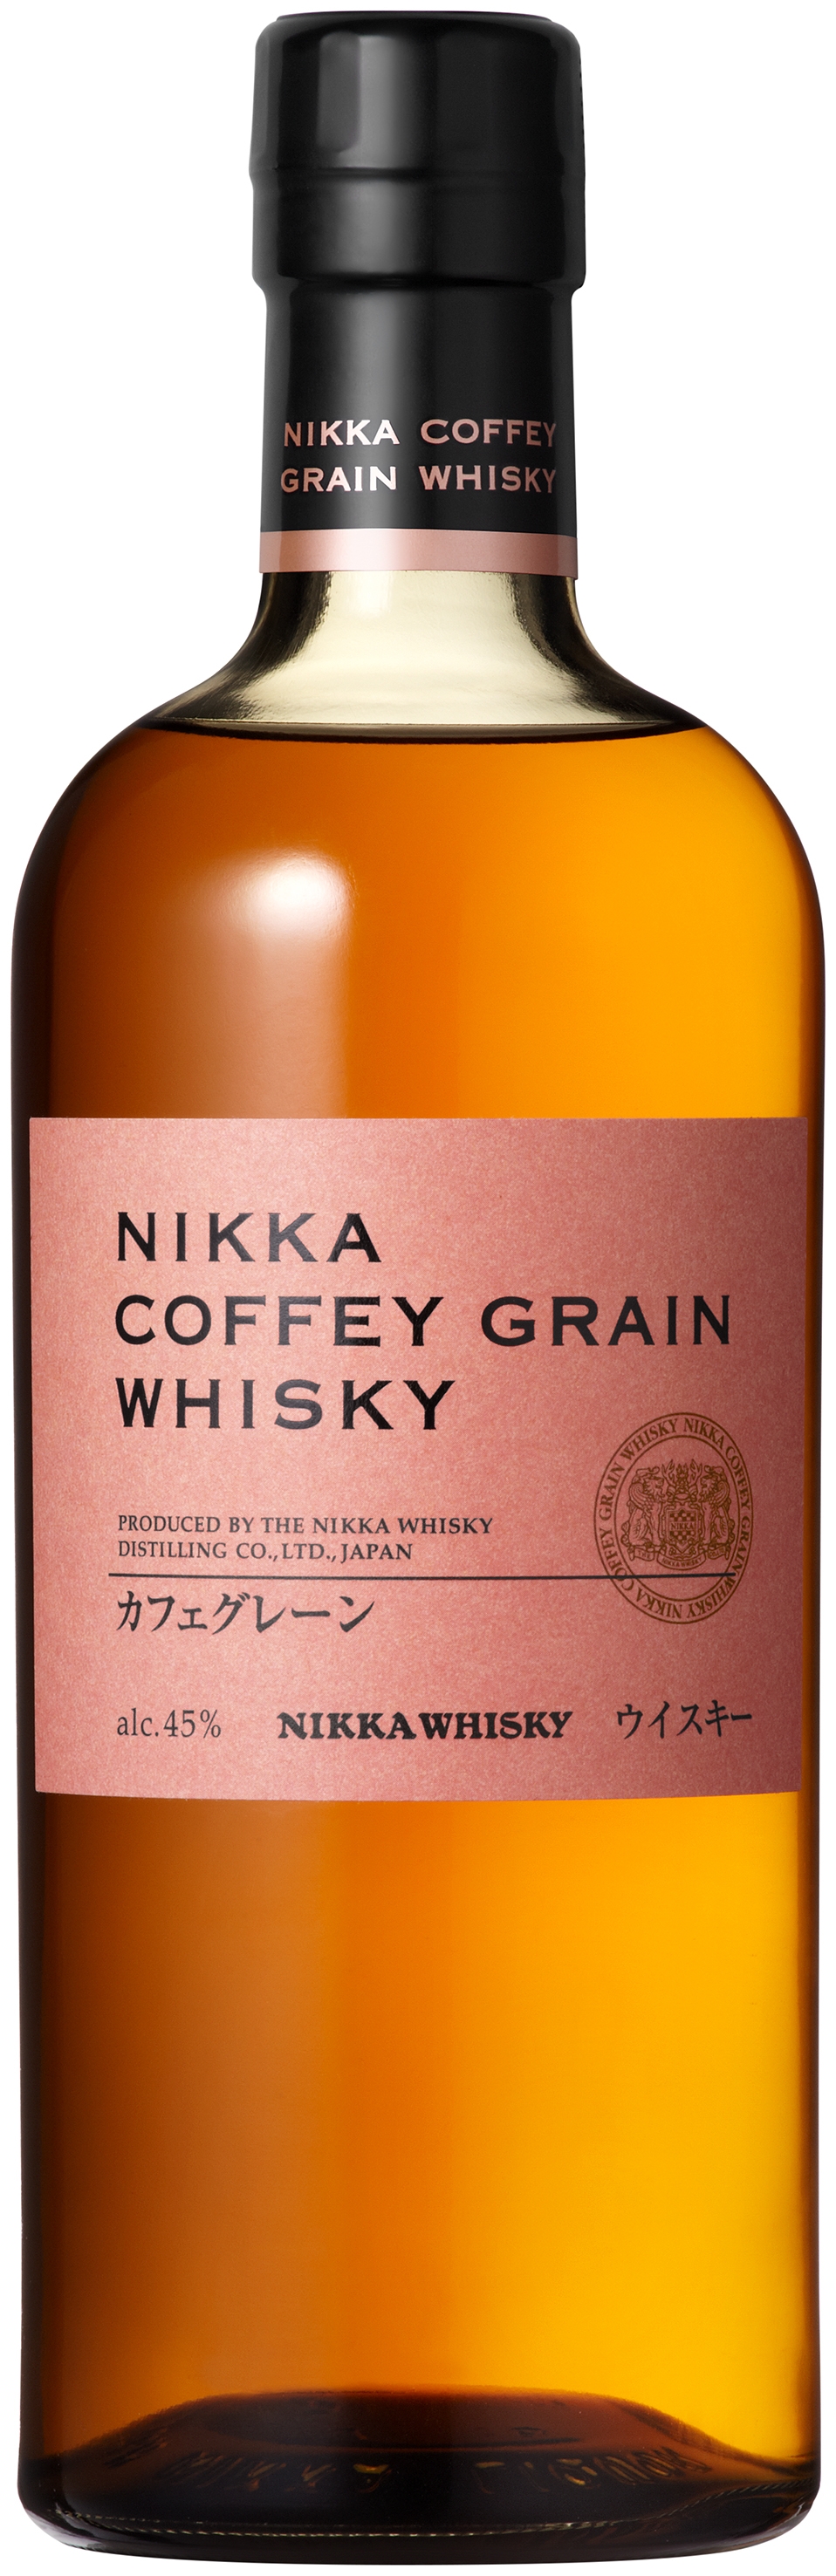 Nikka-Coffey-Grain-750ml_300-3698330611.jpg